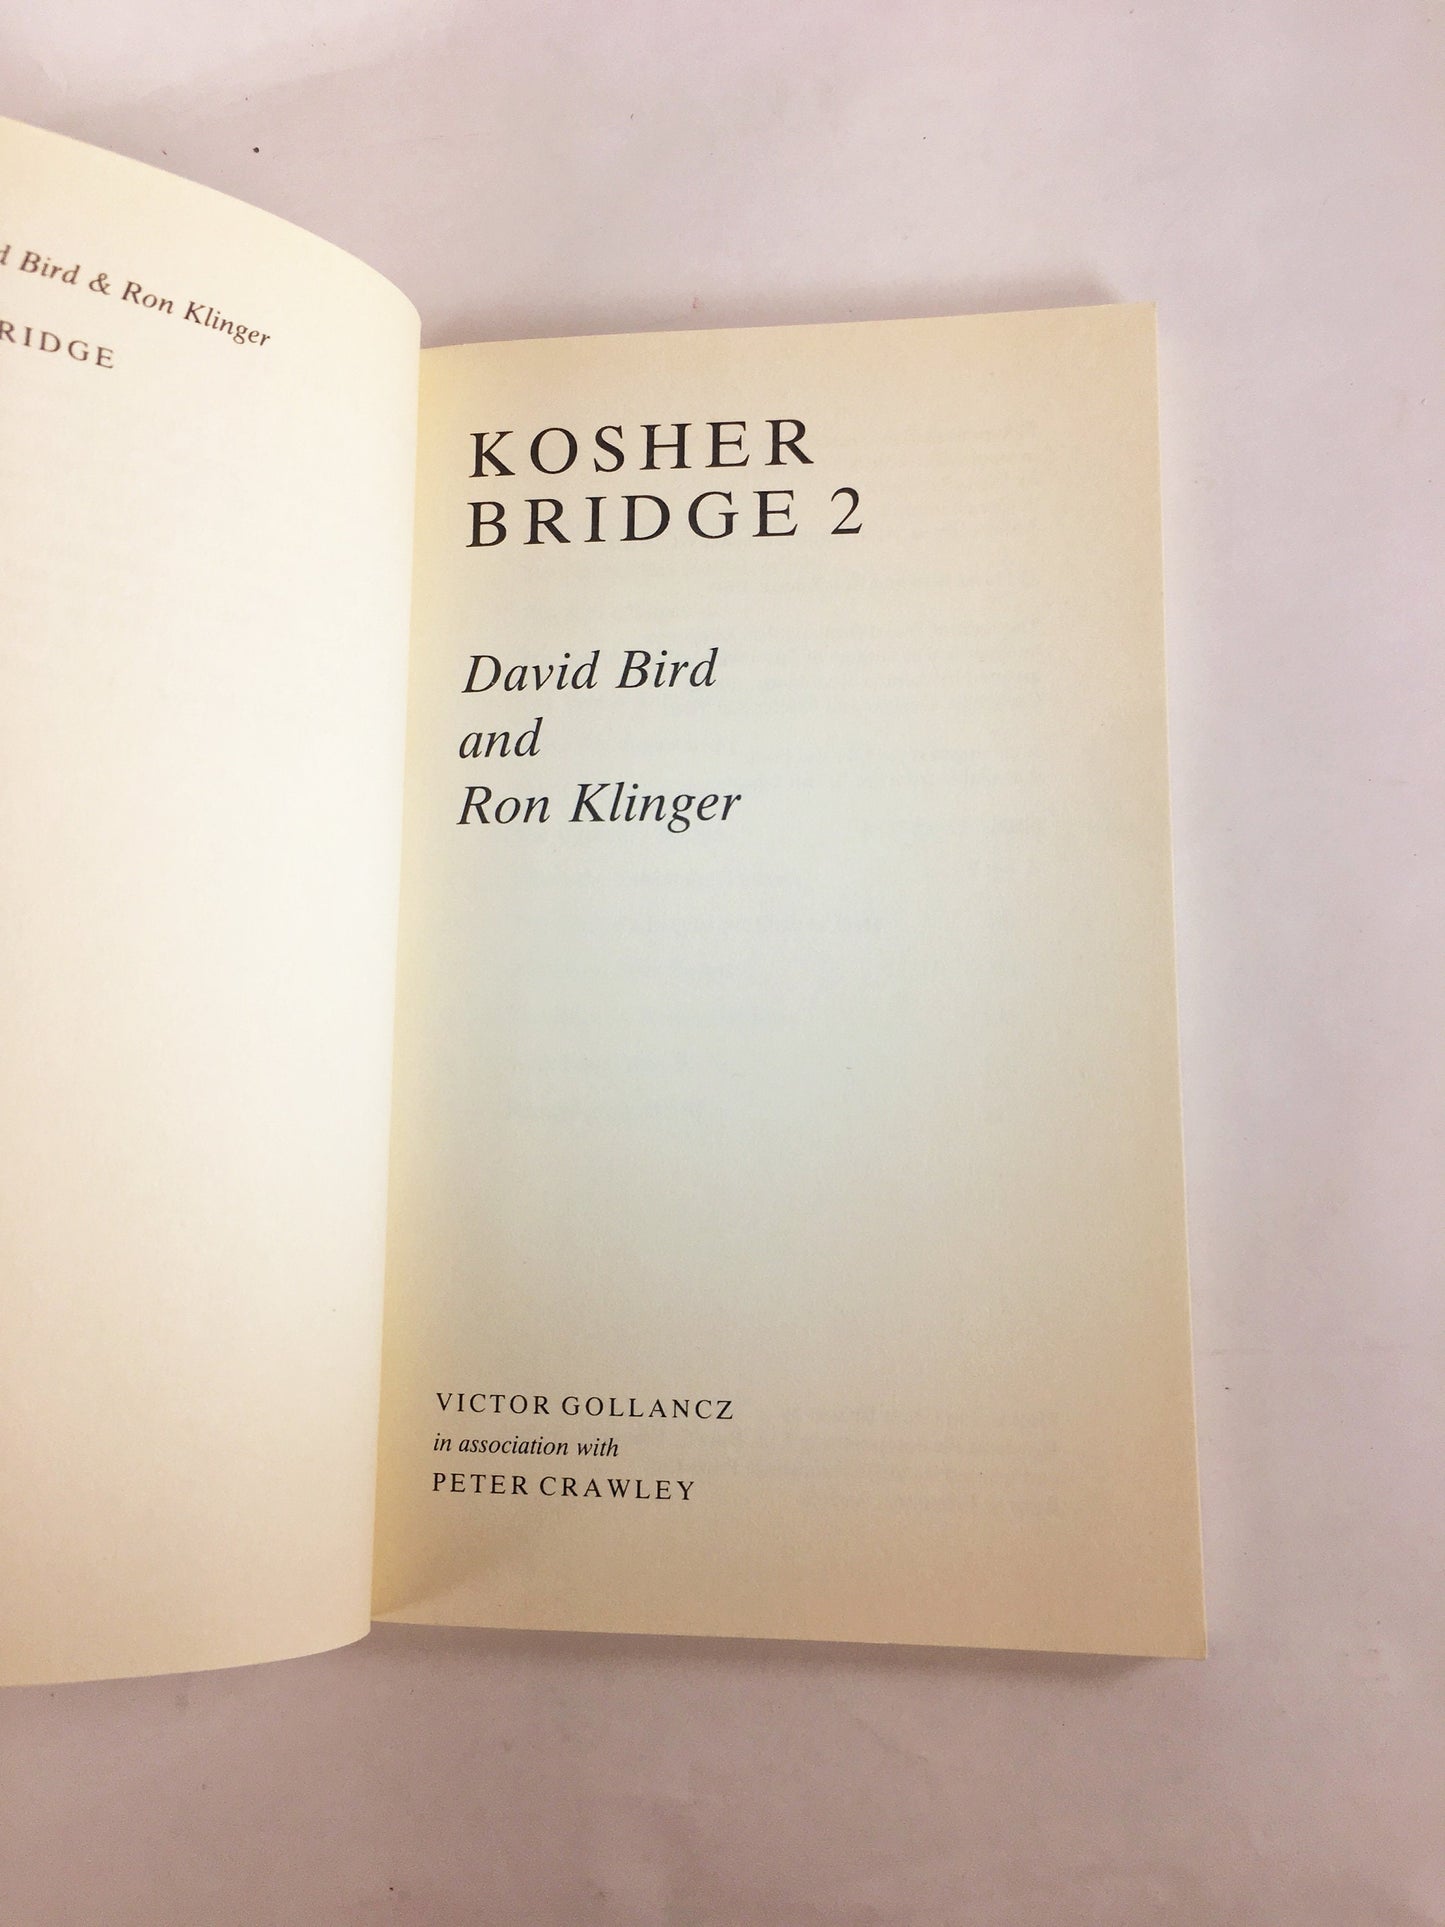 Kosher Bridge 2 by David Bird and Ron Klinger circa 1994. Vintage paperback book. Entertaining & instructive guide to improve your game.